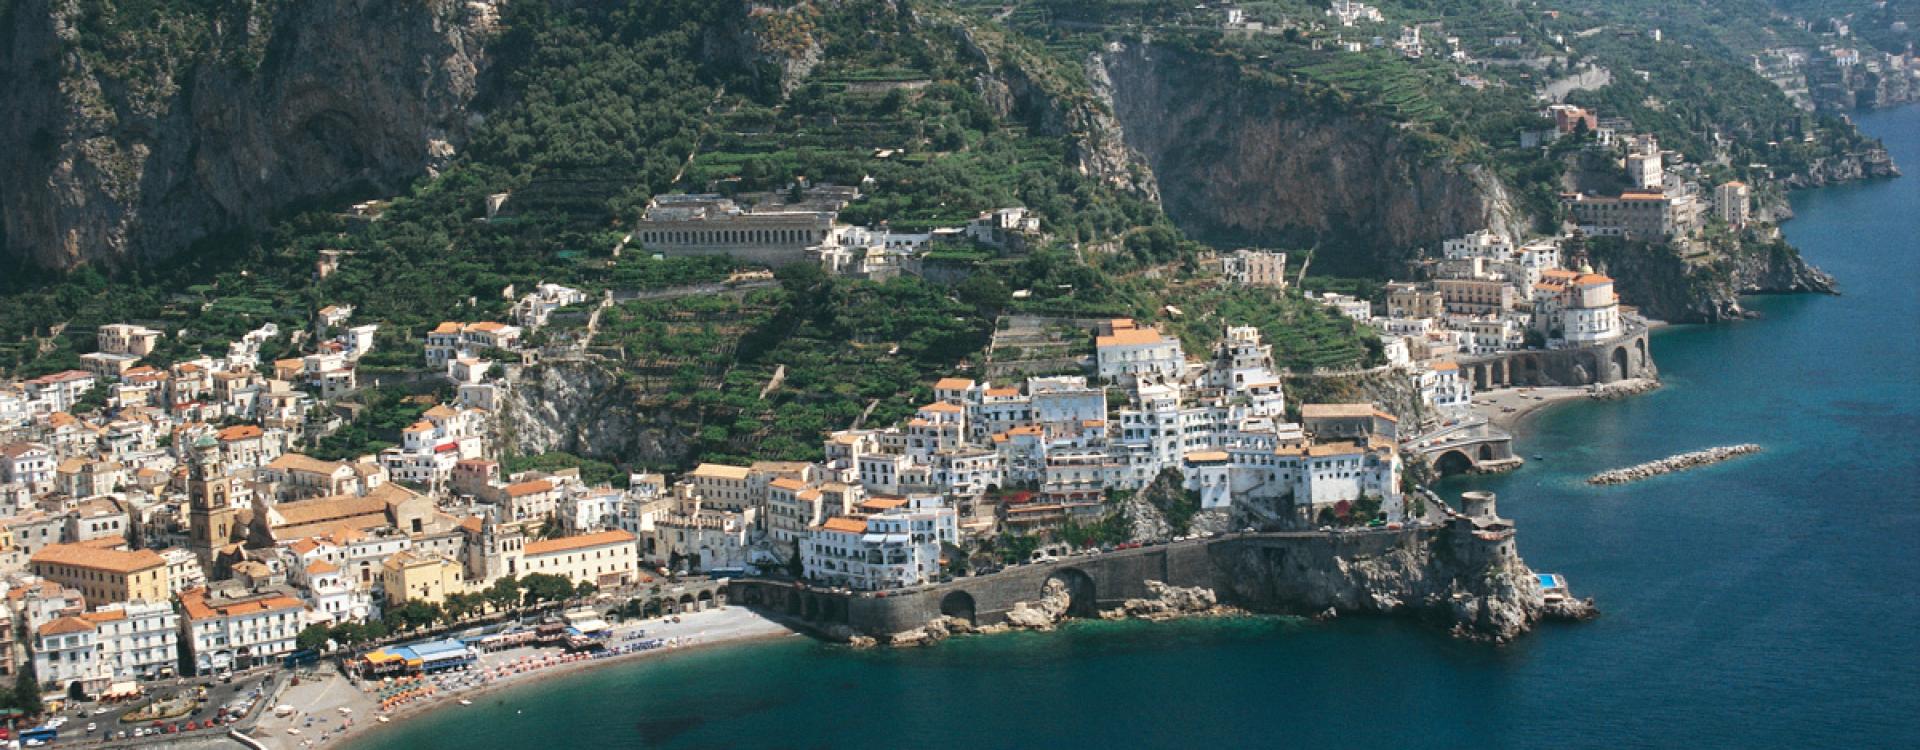 Amalfi Coast minor town